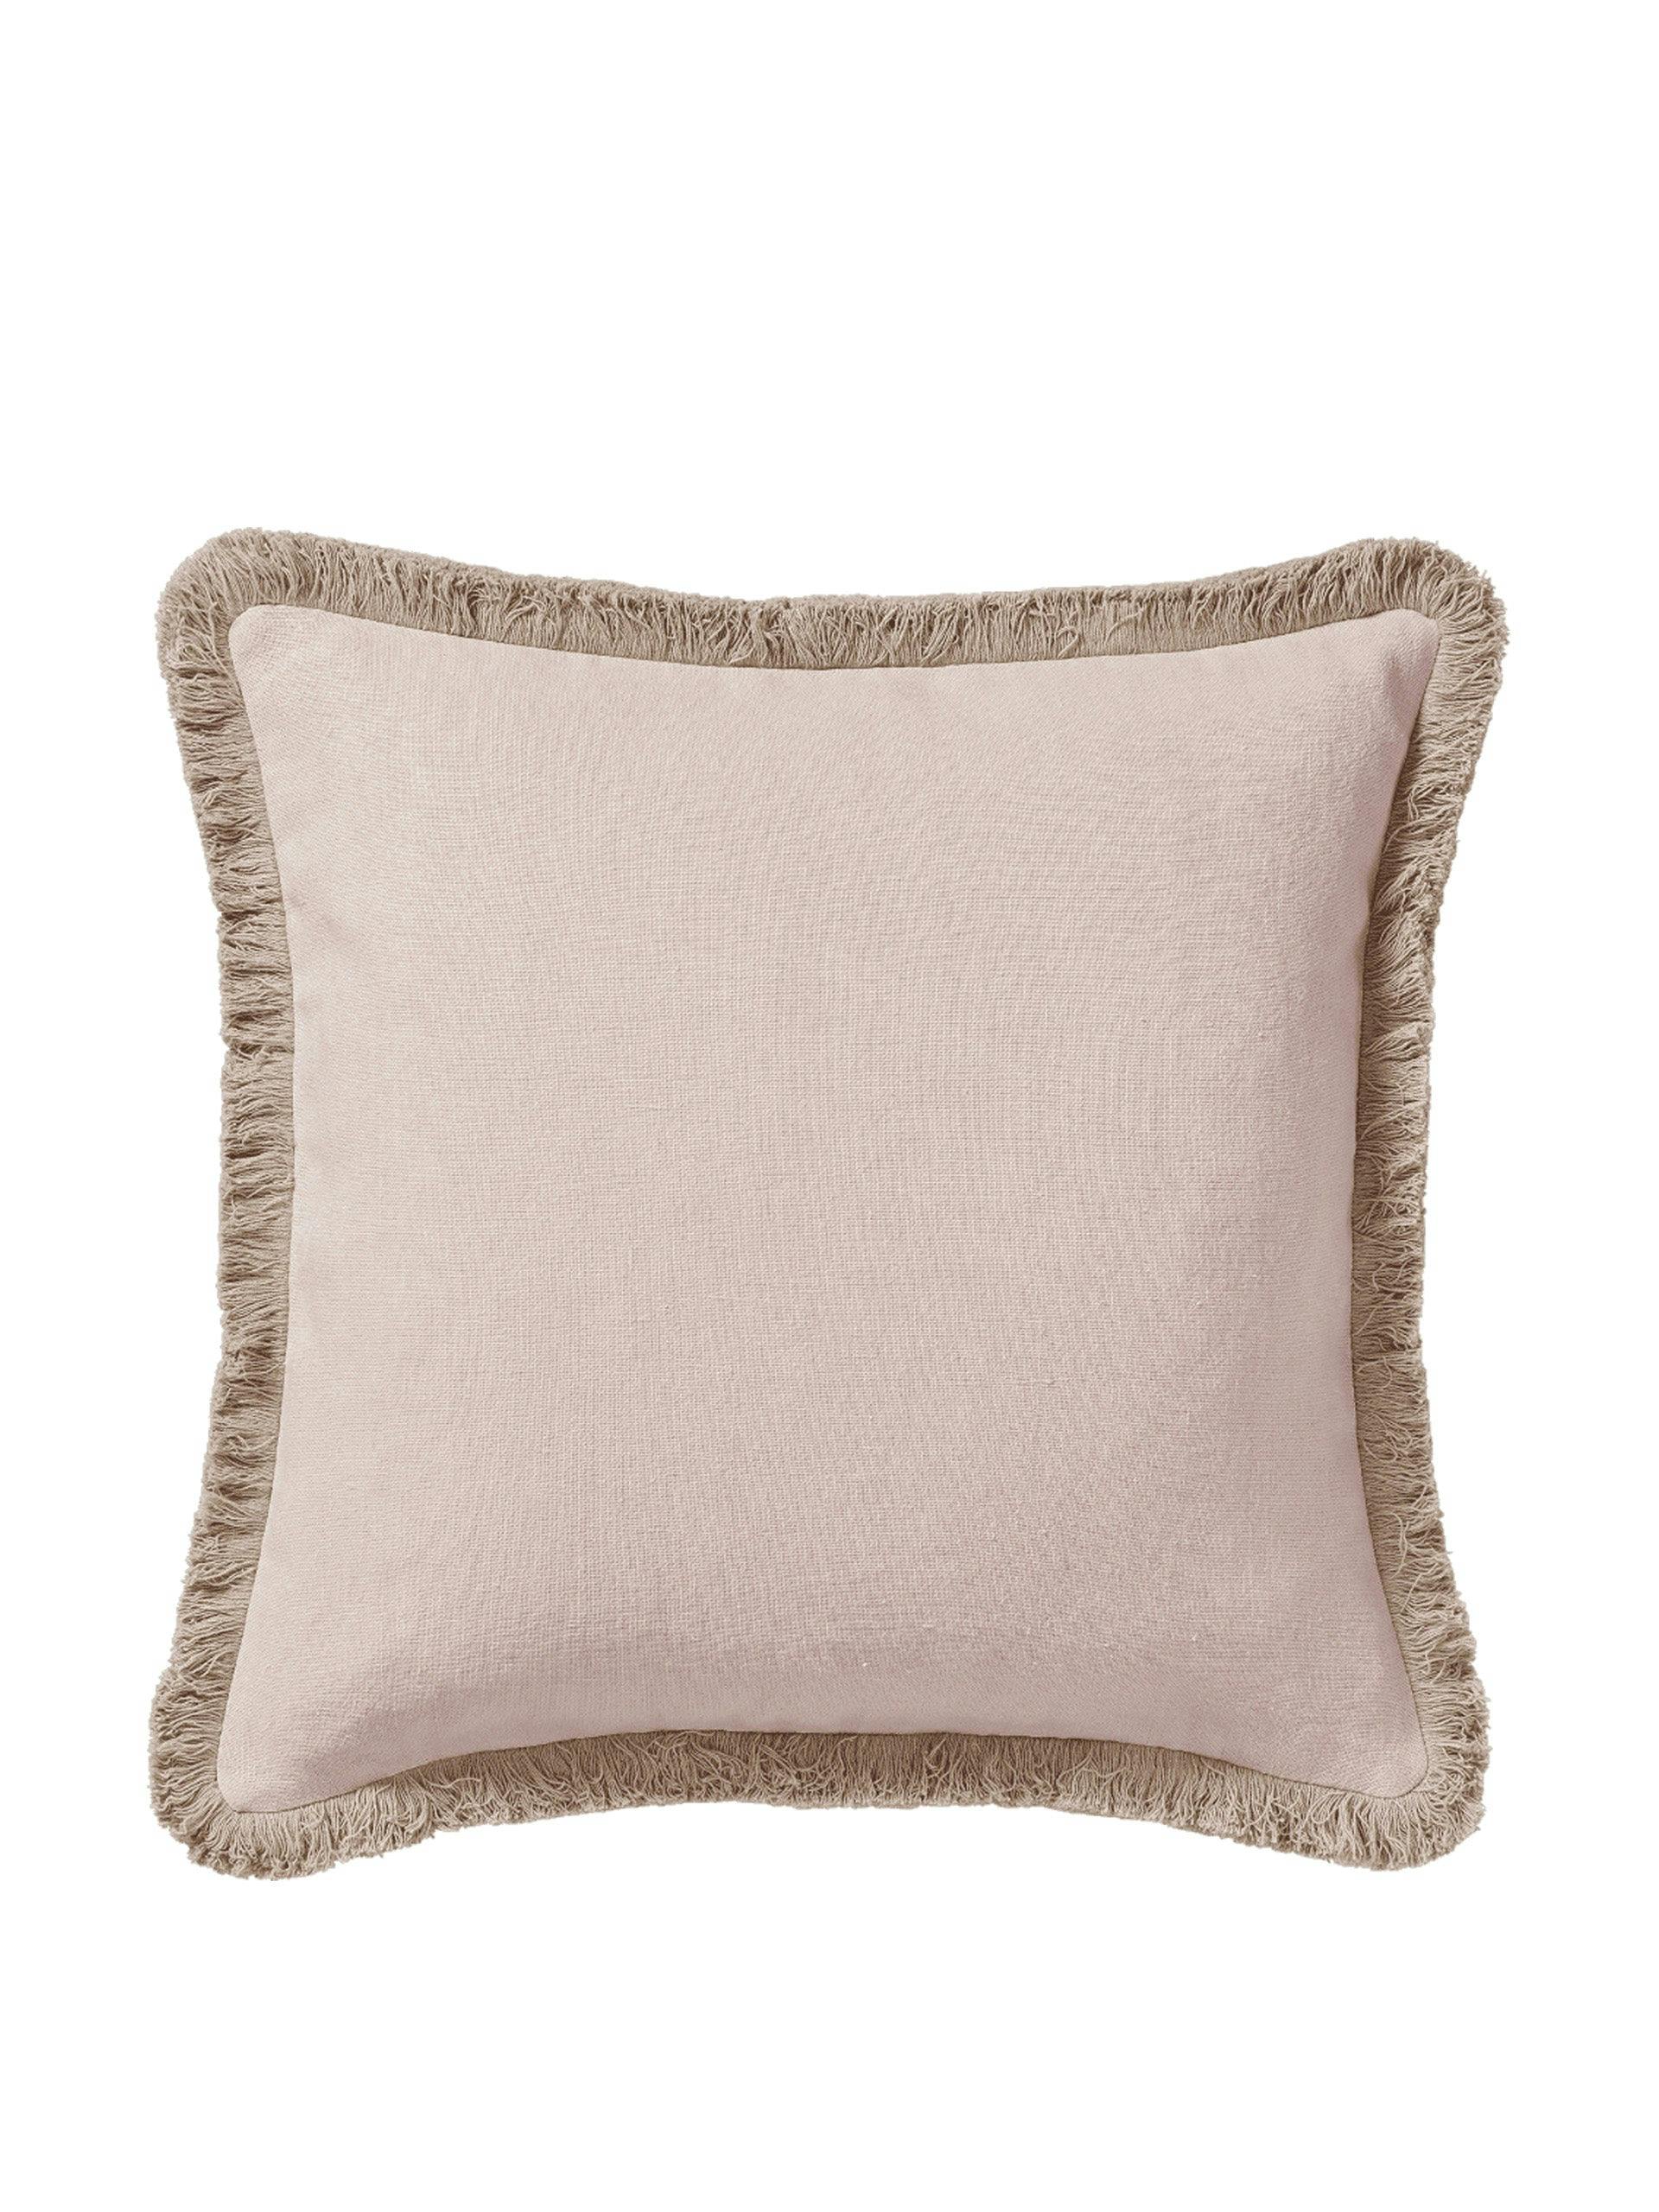 Stonewashed linen cushion cover with fringing